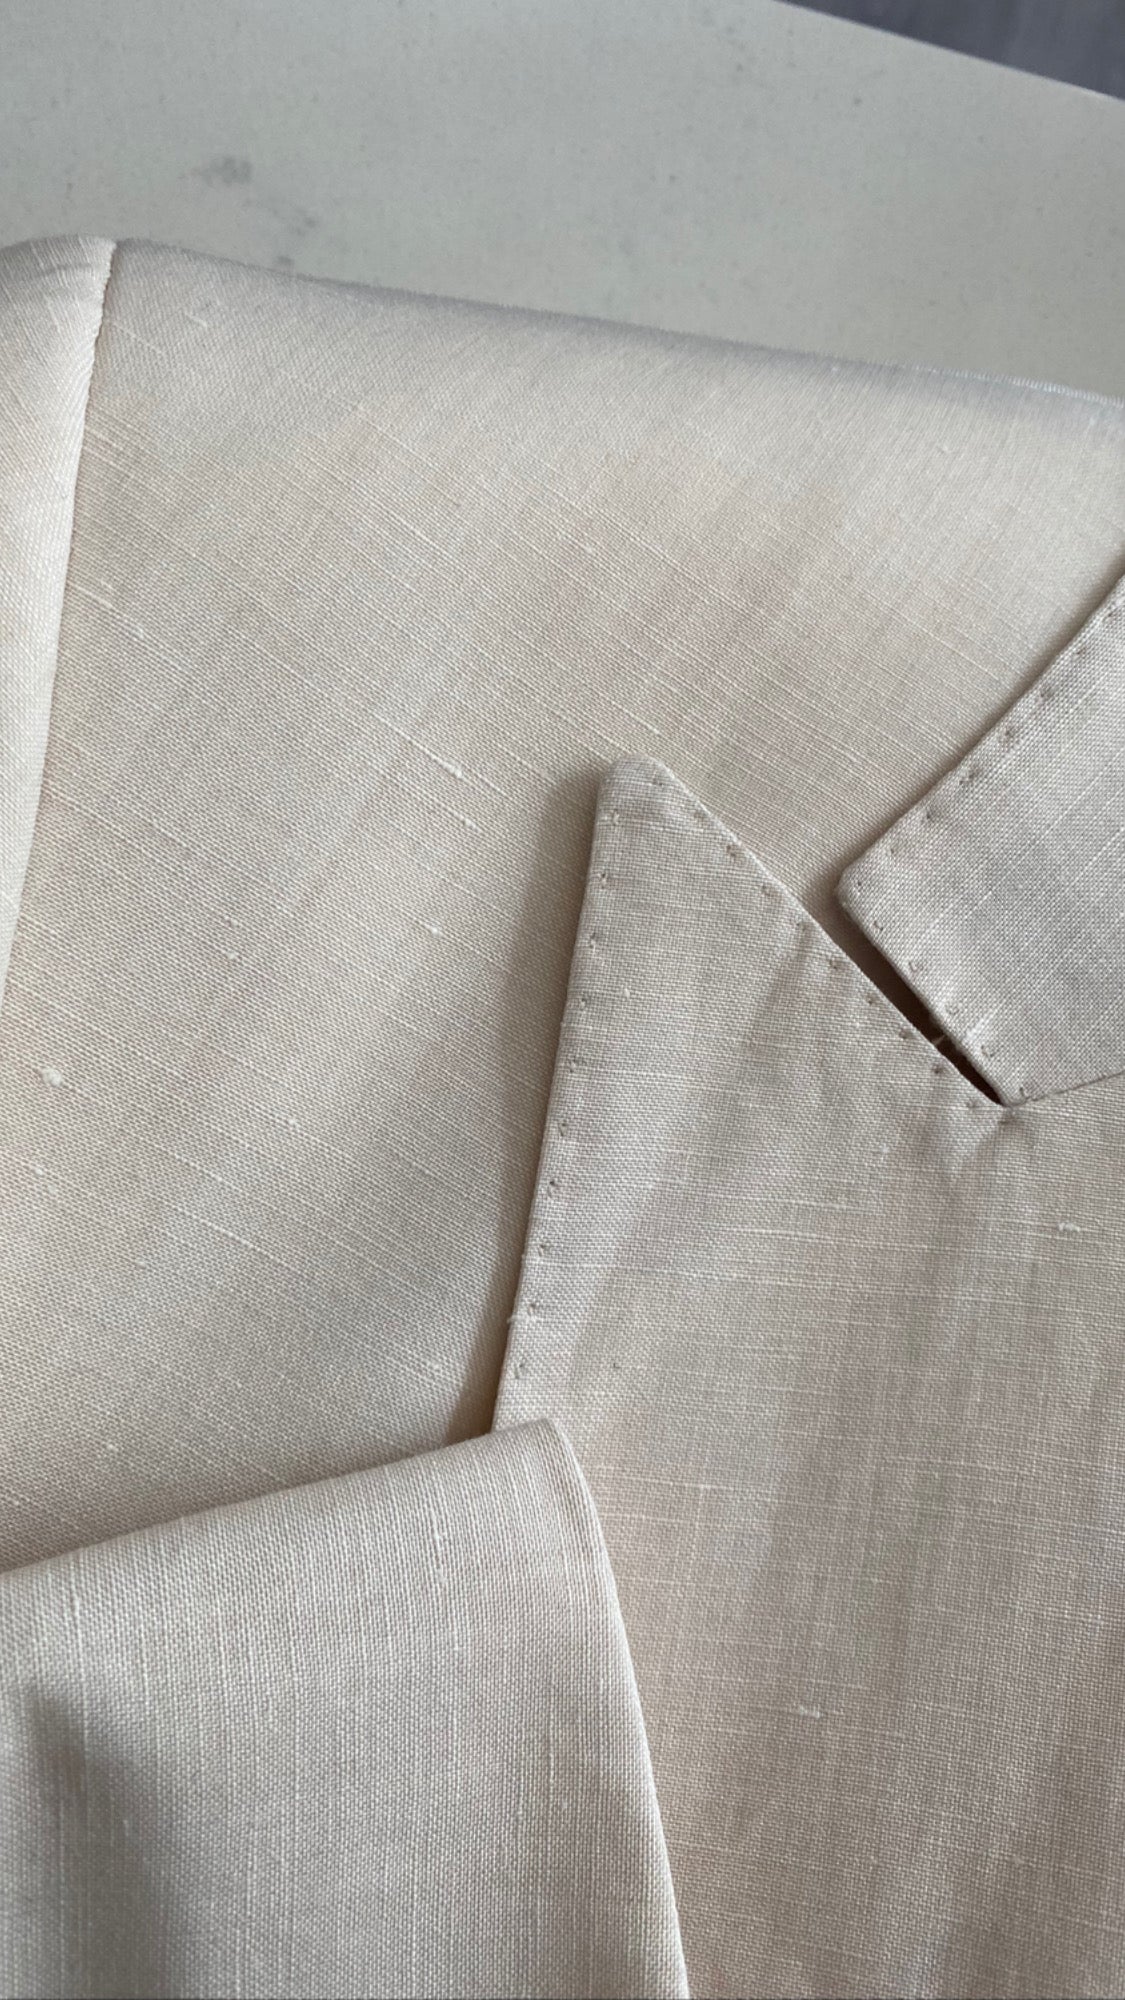 Why quality fabrics matter